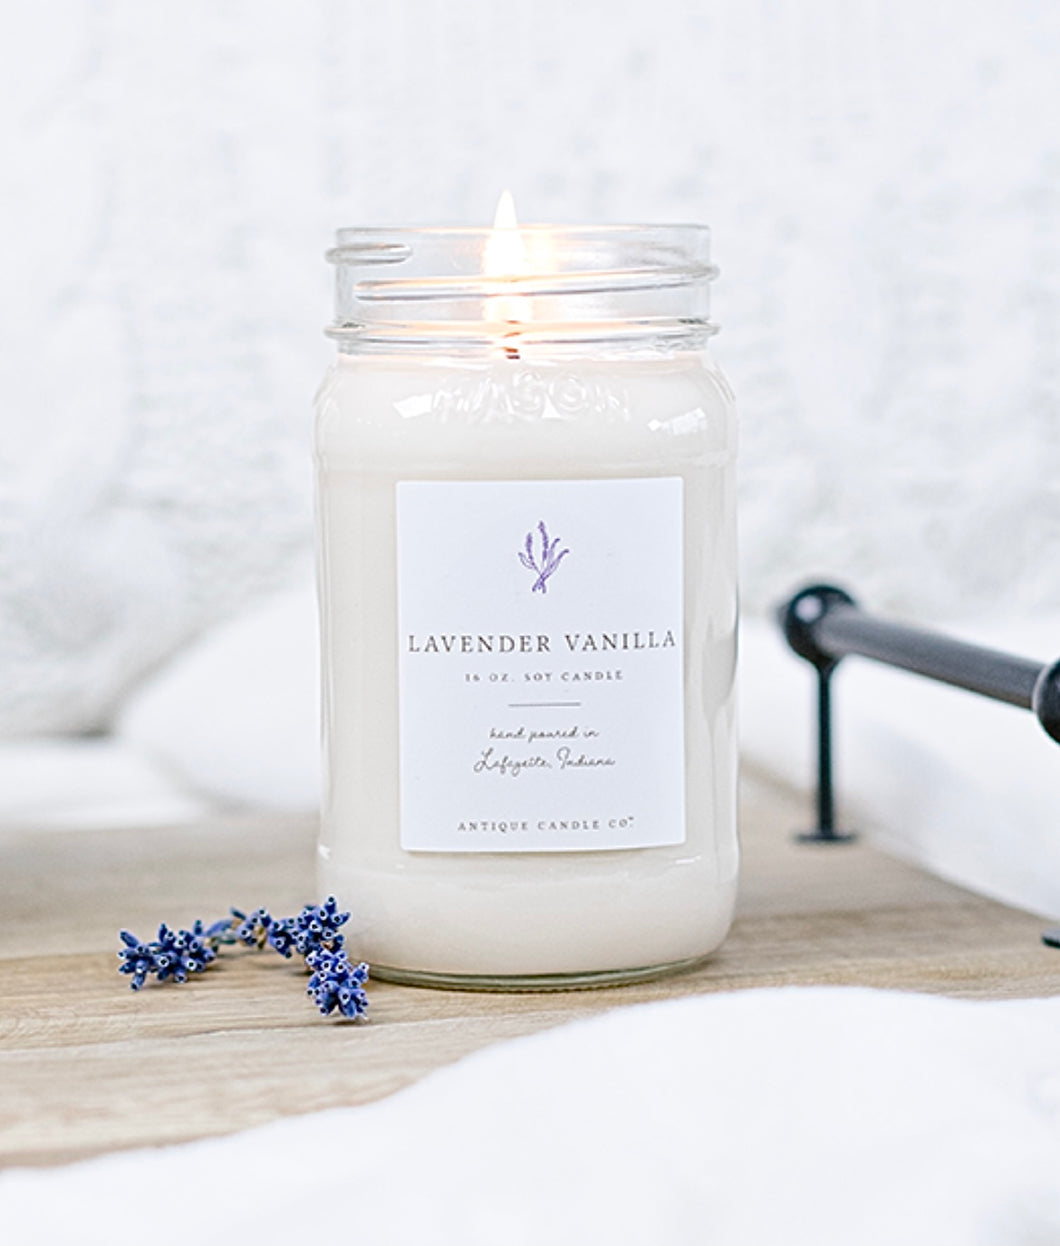 Antique Candle Co. Lavender Vanilla